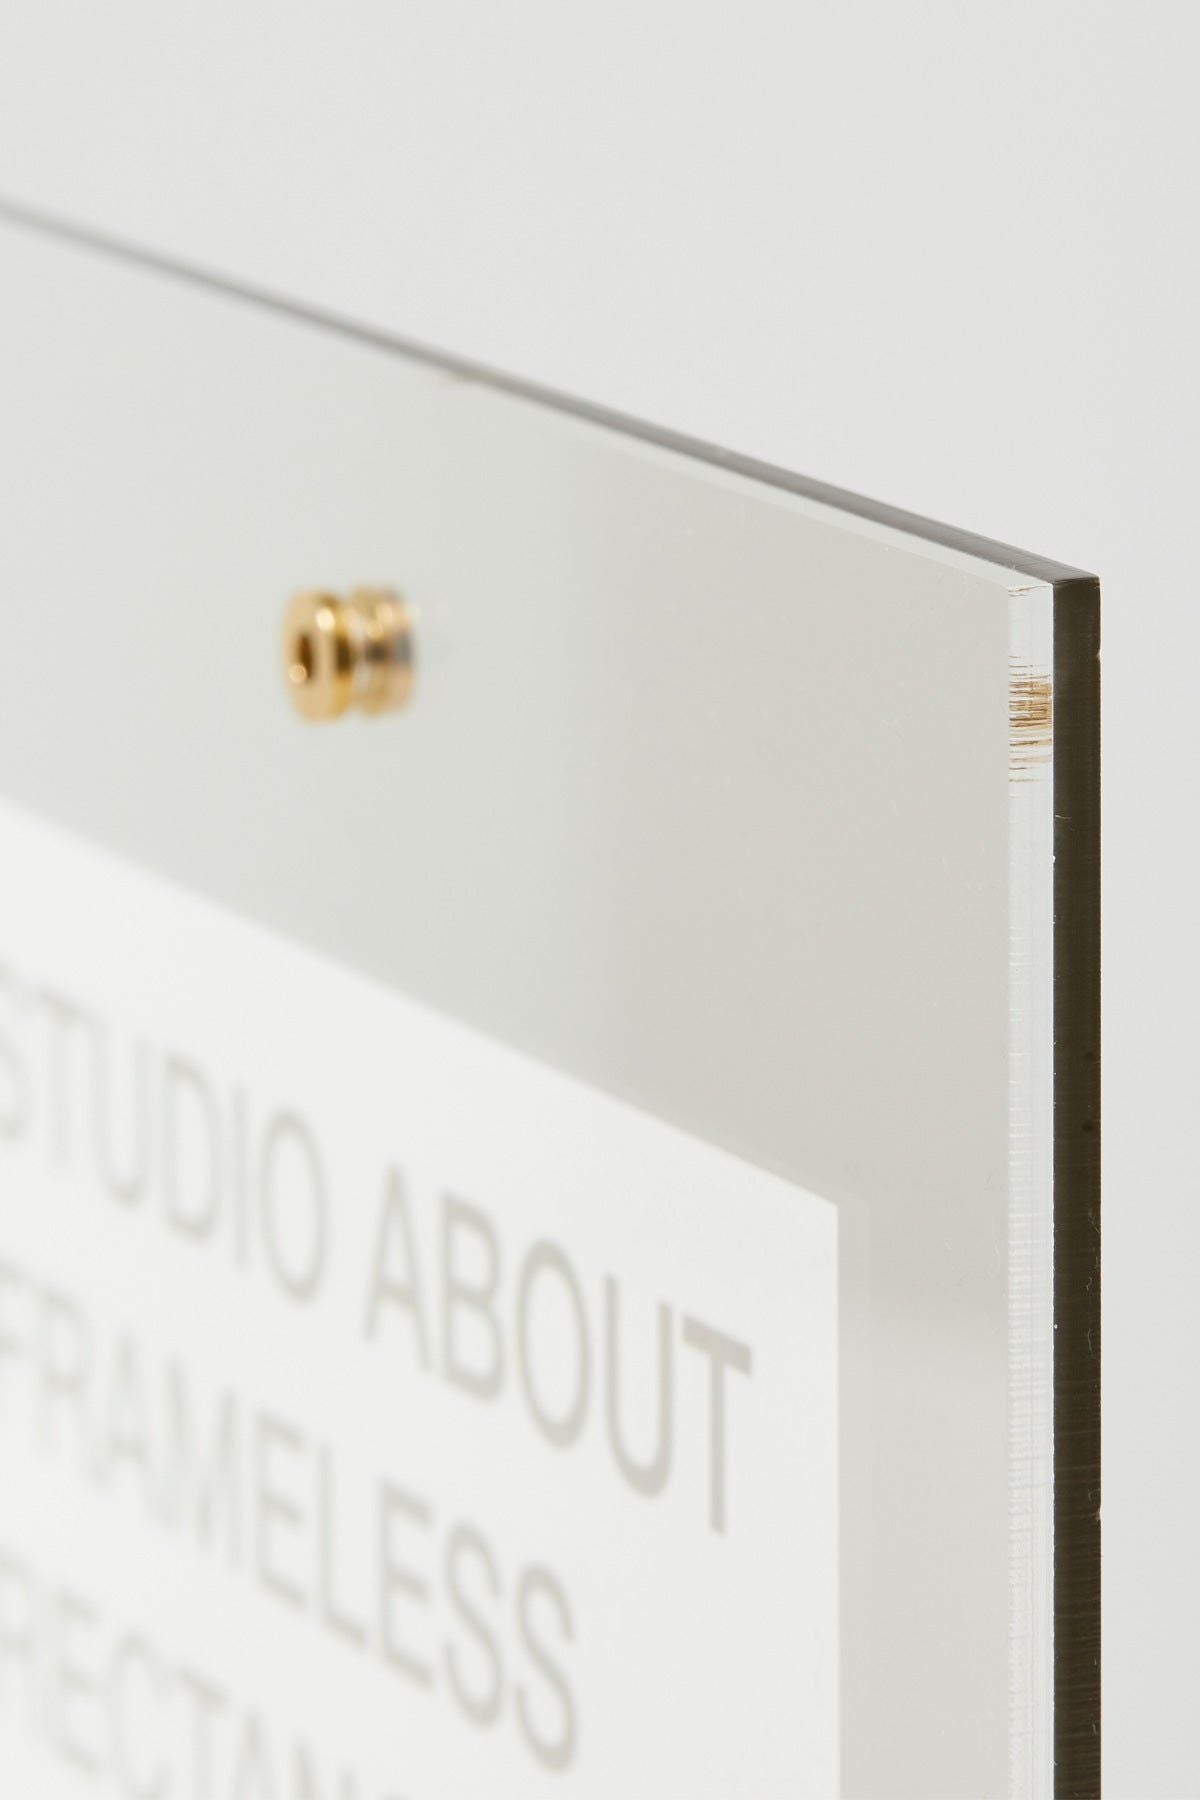 Studio About Frameless Frame A2 Rectangle, Smoke